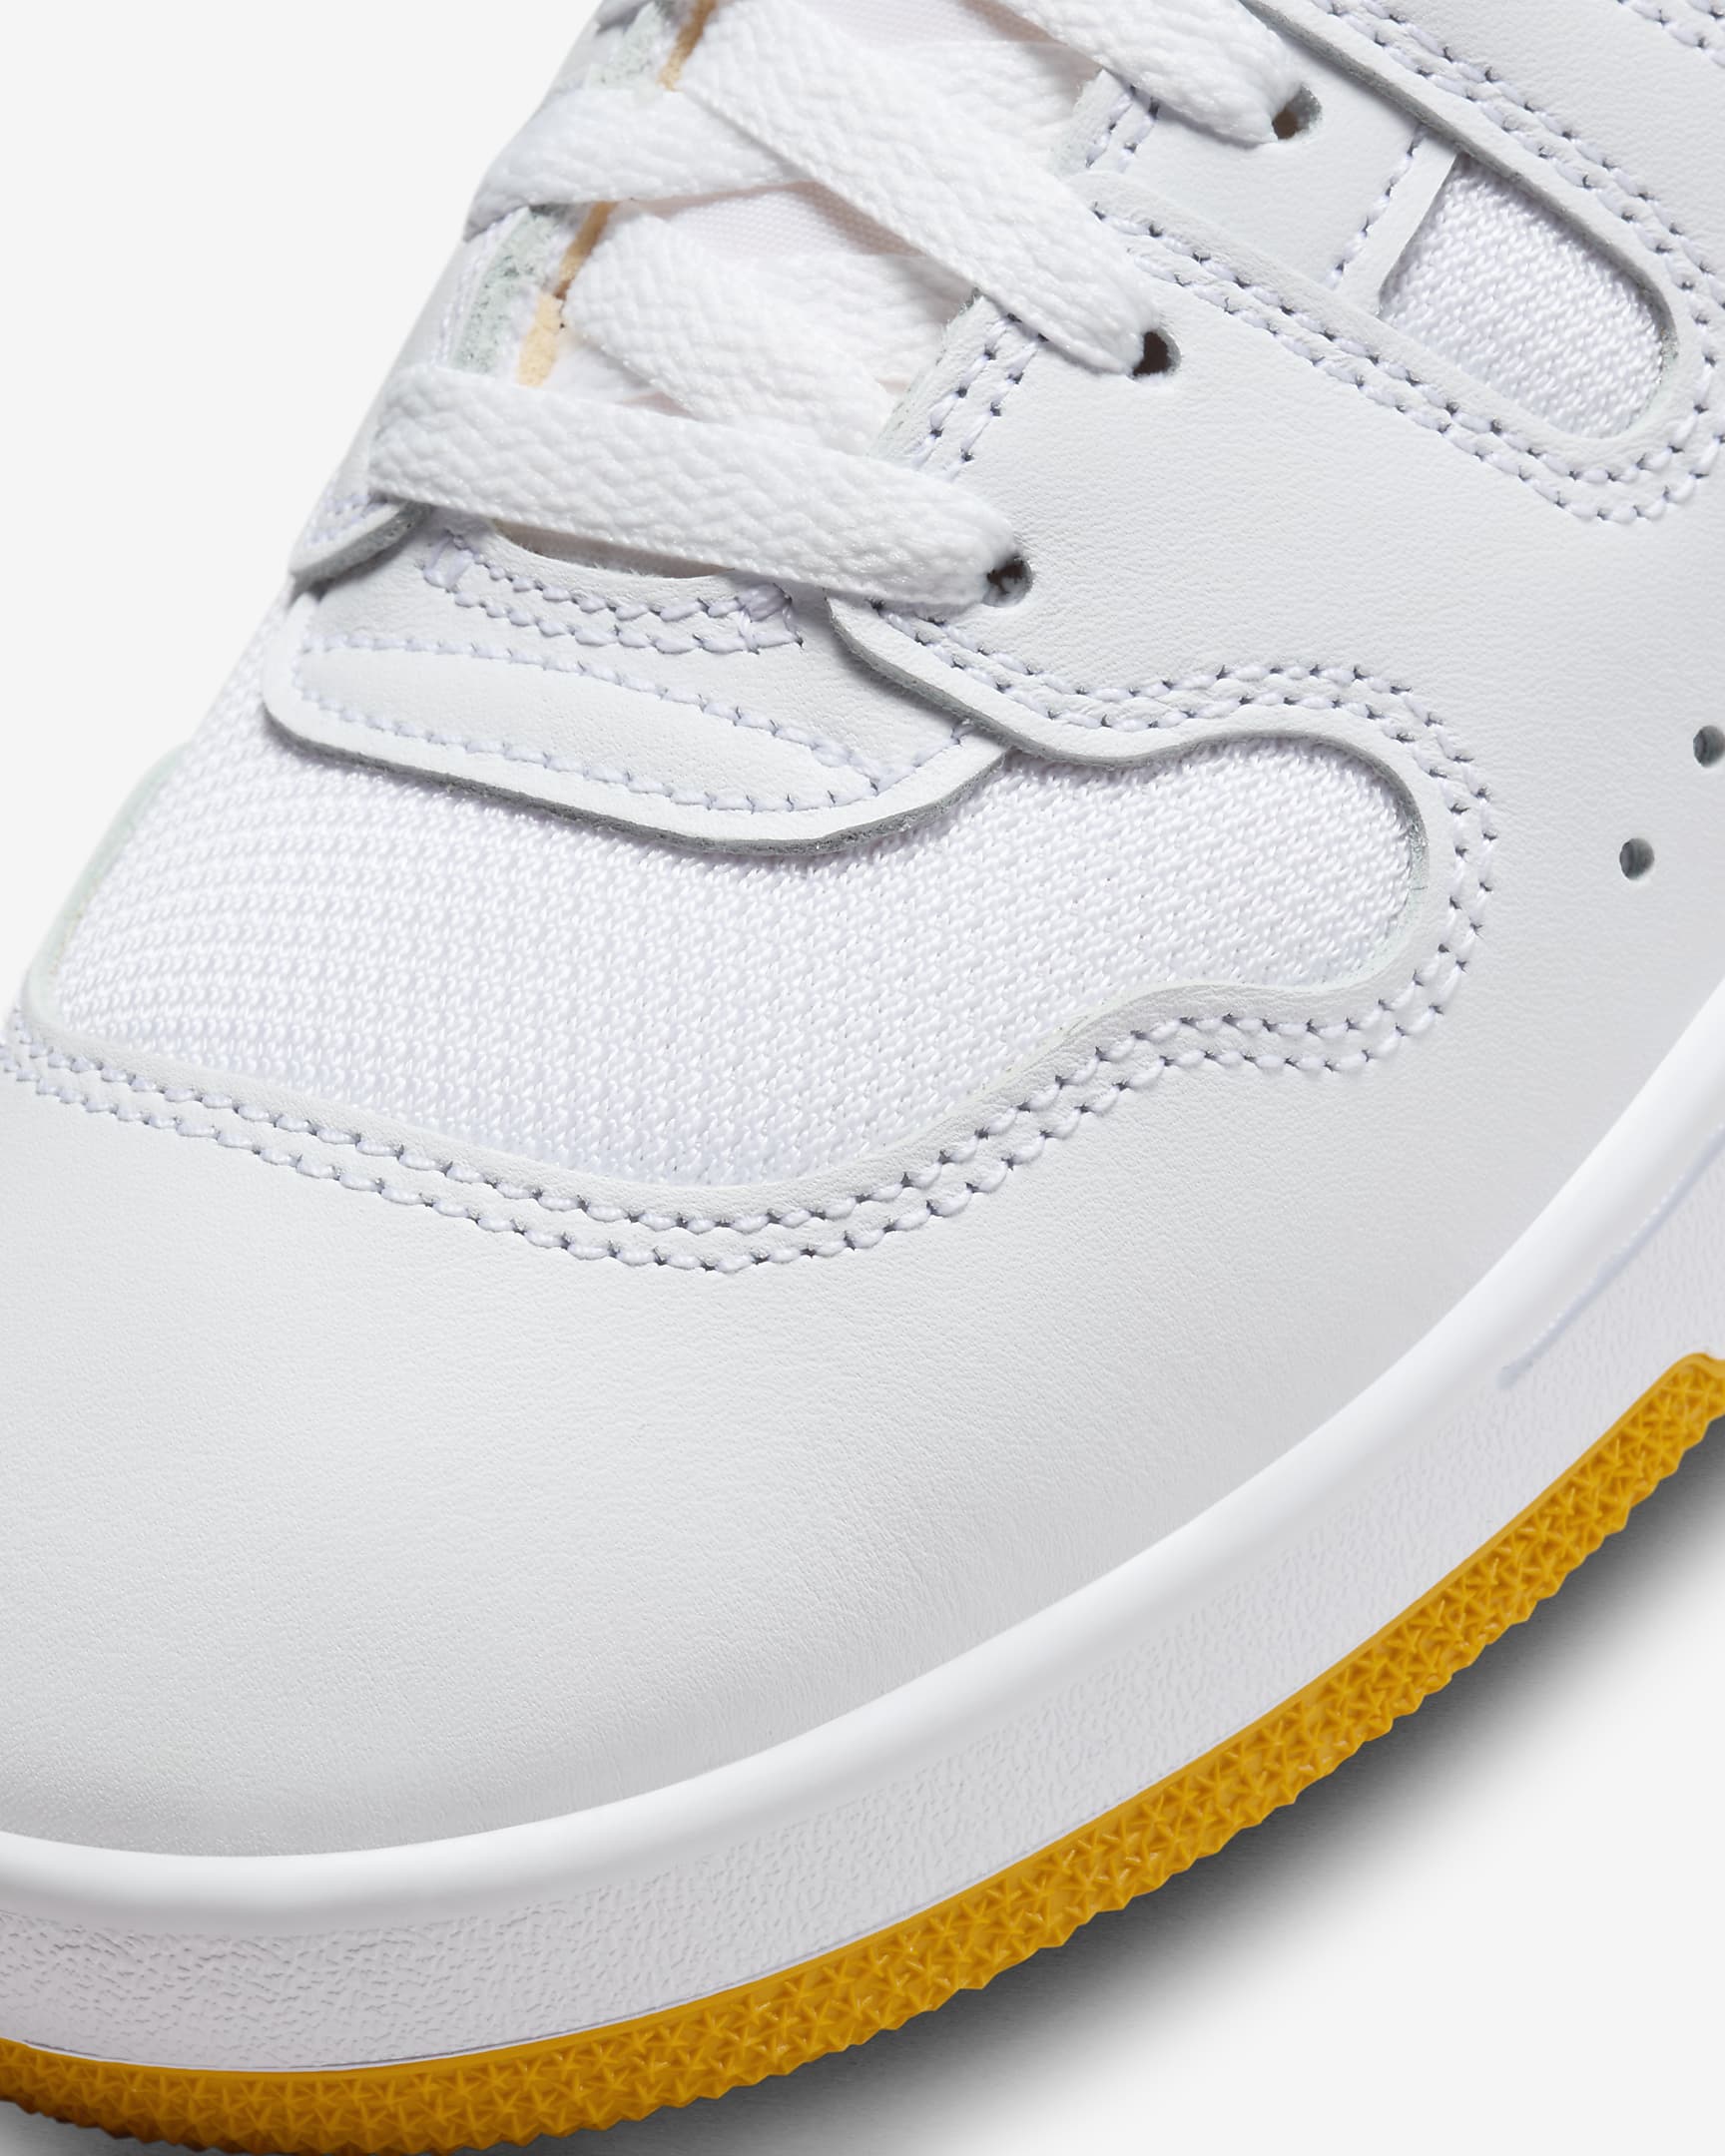 Chaussure Nike Attack pour homme - Blanc/Blanc/Lemon Venom